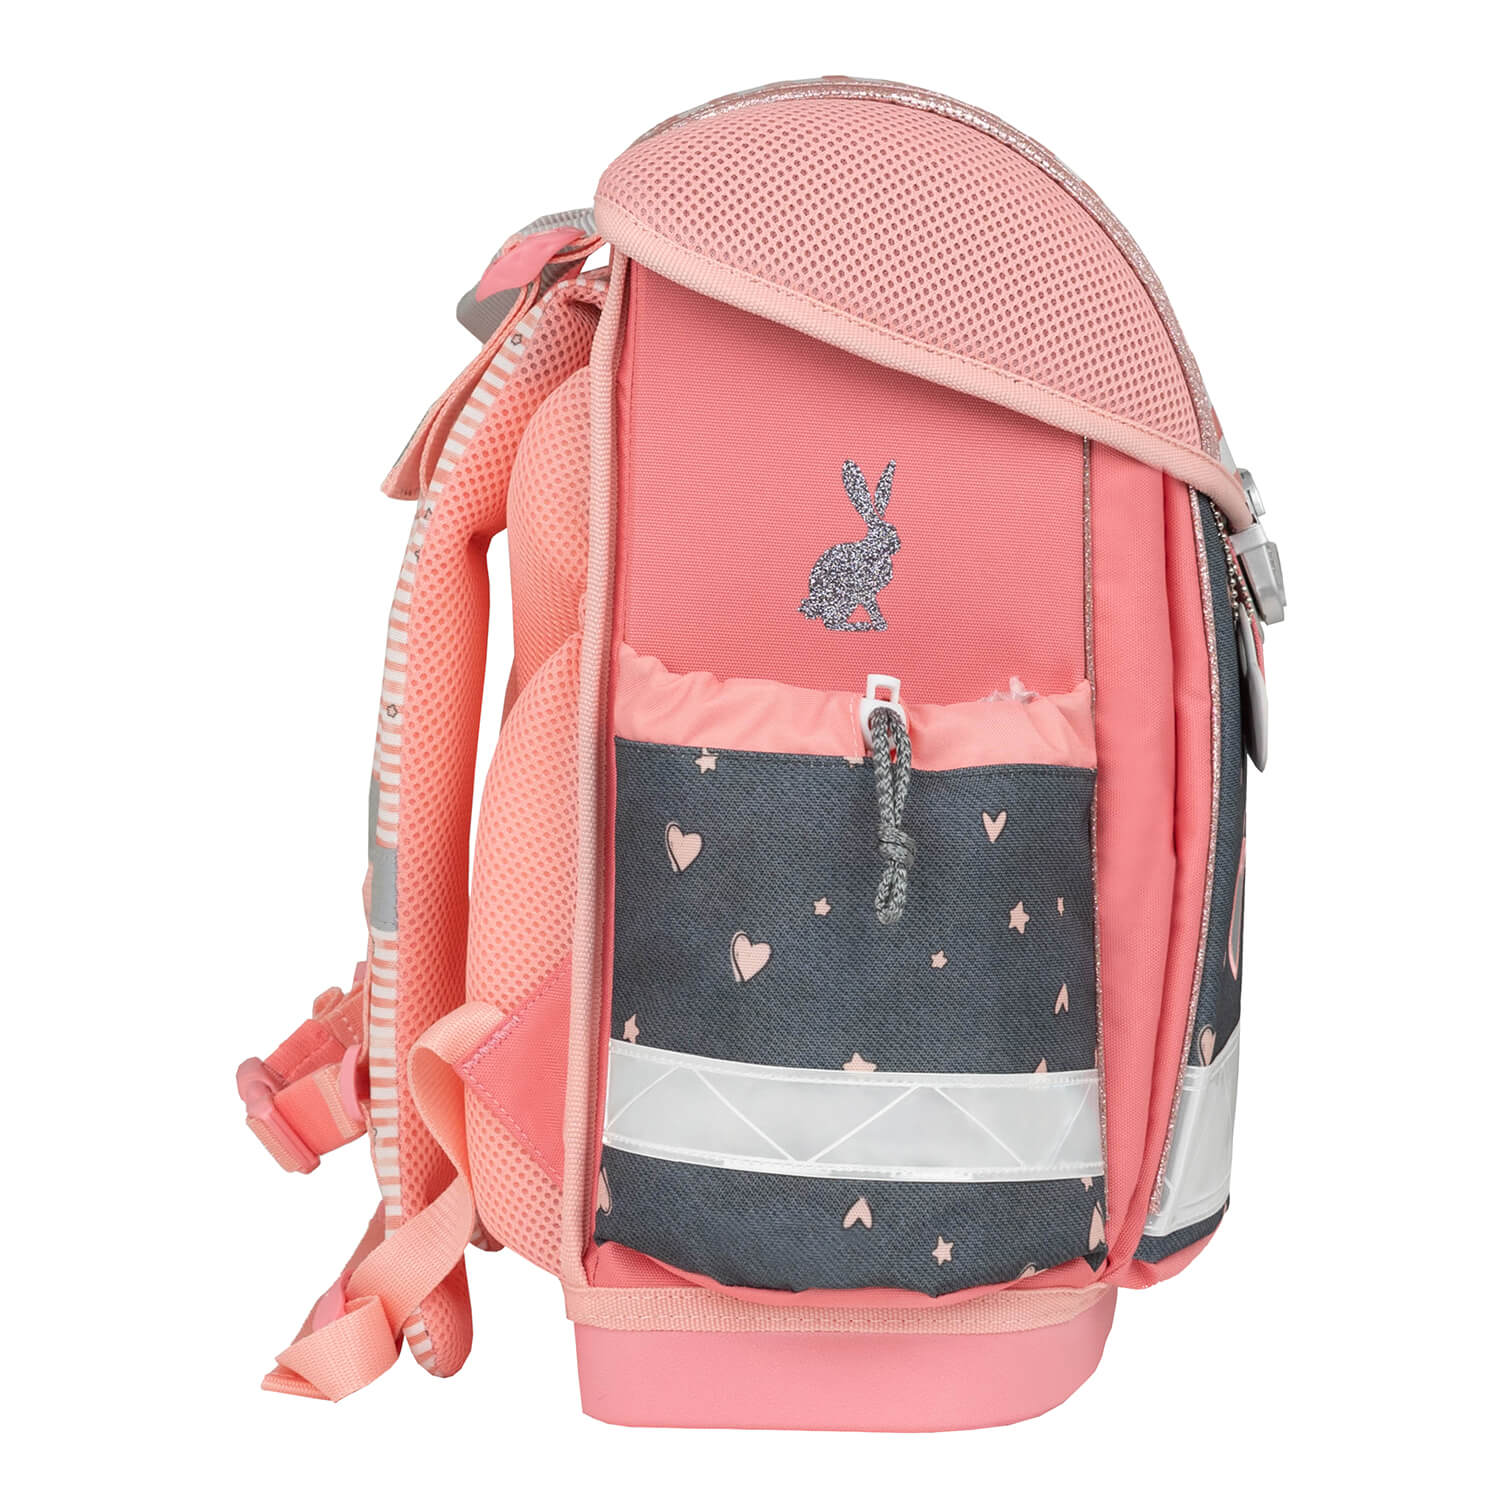 Classy Little Bunnies schoolbag set 4 pcs